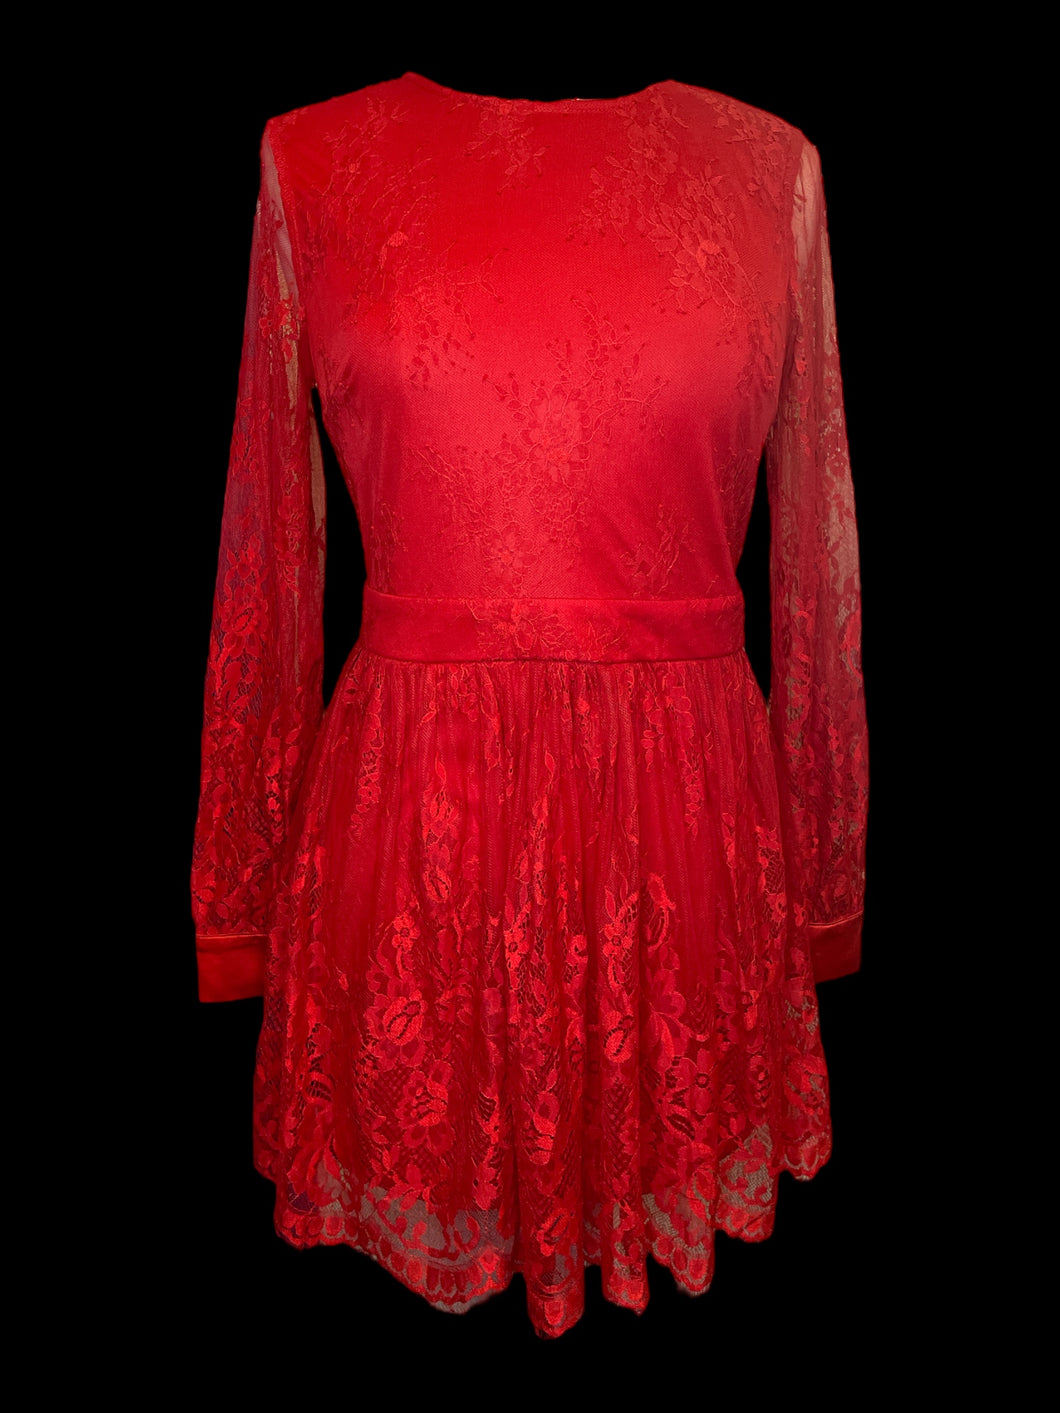 M Red long balloon sleeve dress w/ floral lace, button cuffs, & back zipper closure